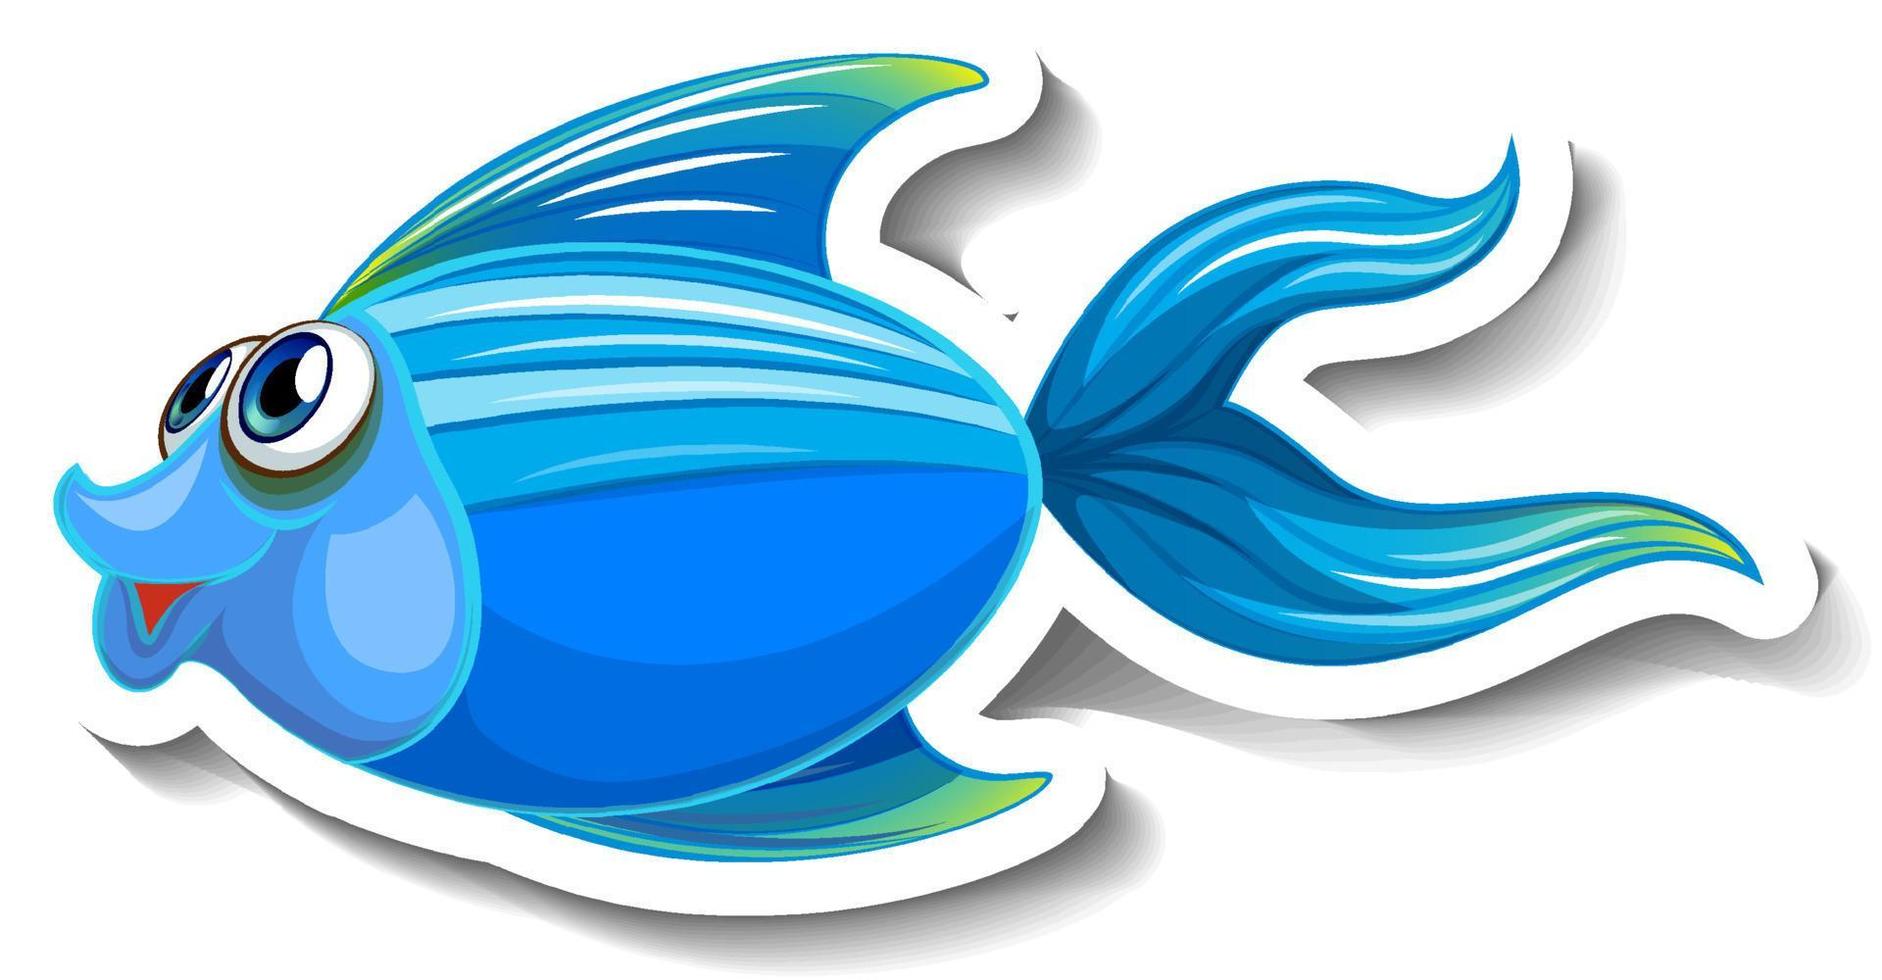 Pegatina de dibujos animados de animales marinos con peces lindos 3917298  Vector en Vecteezy